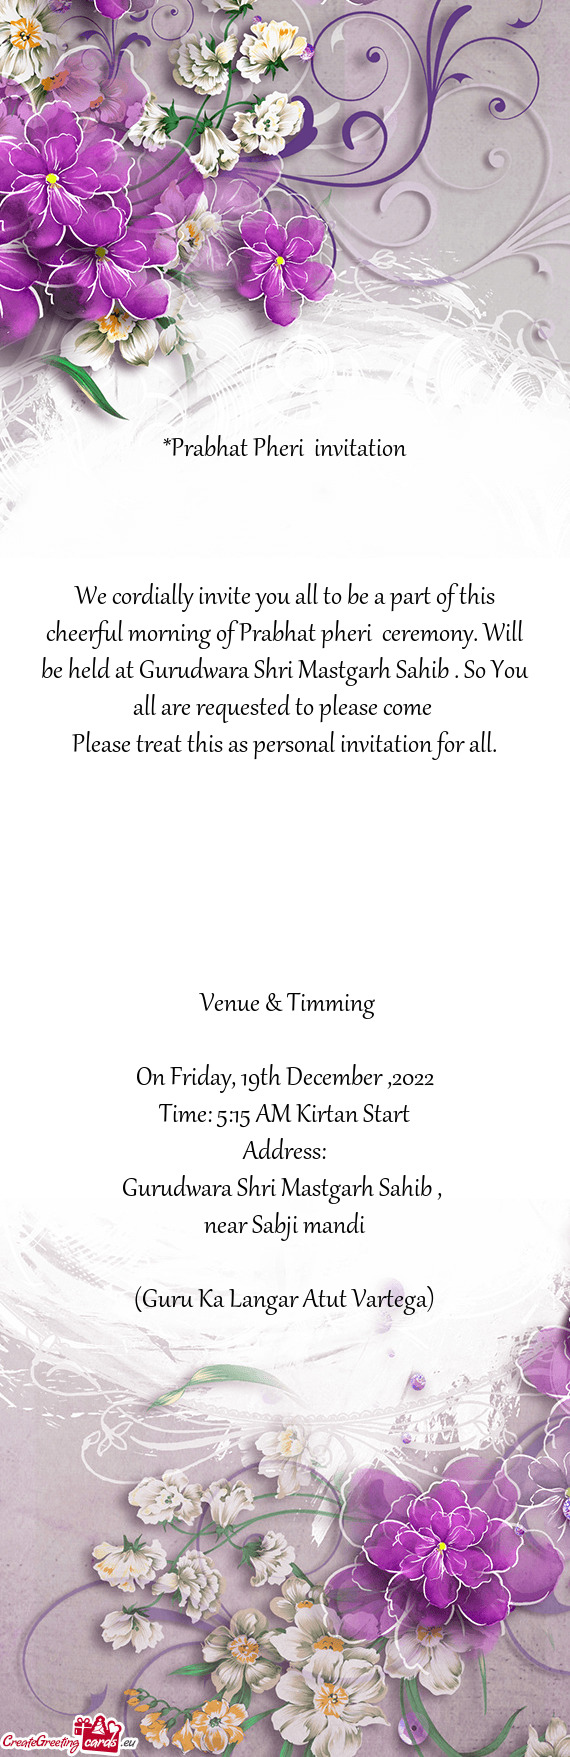 E held at Gurudwara Shri Mastgarh Sahib . So You all are requested to please come